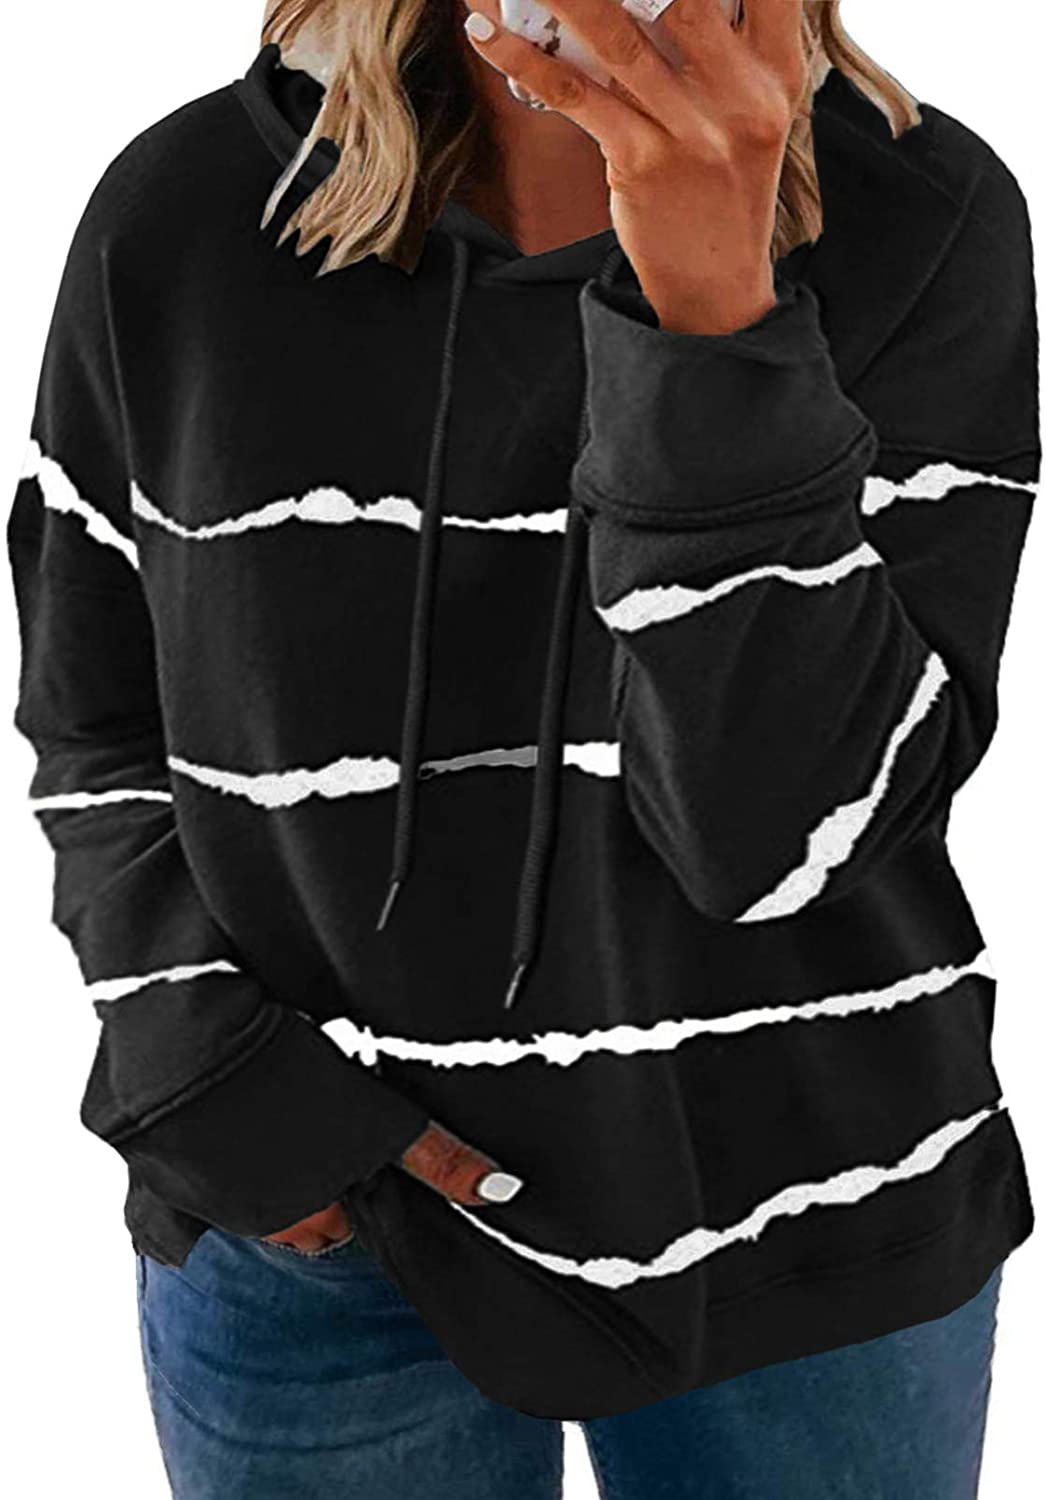 Eytino Plus Size Sweatshirt for Women Long Sleeve Colorblock